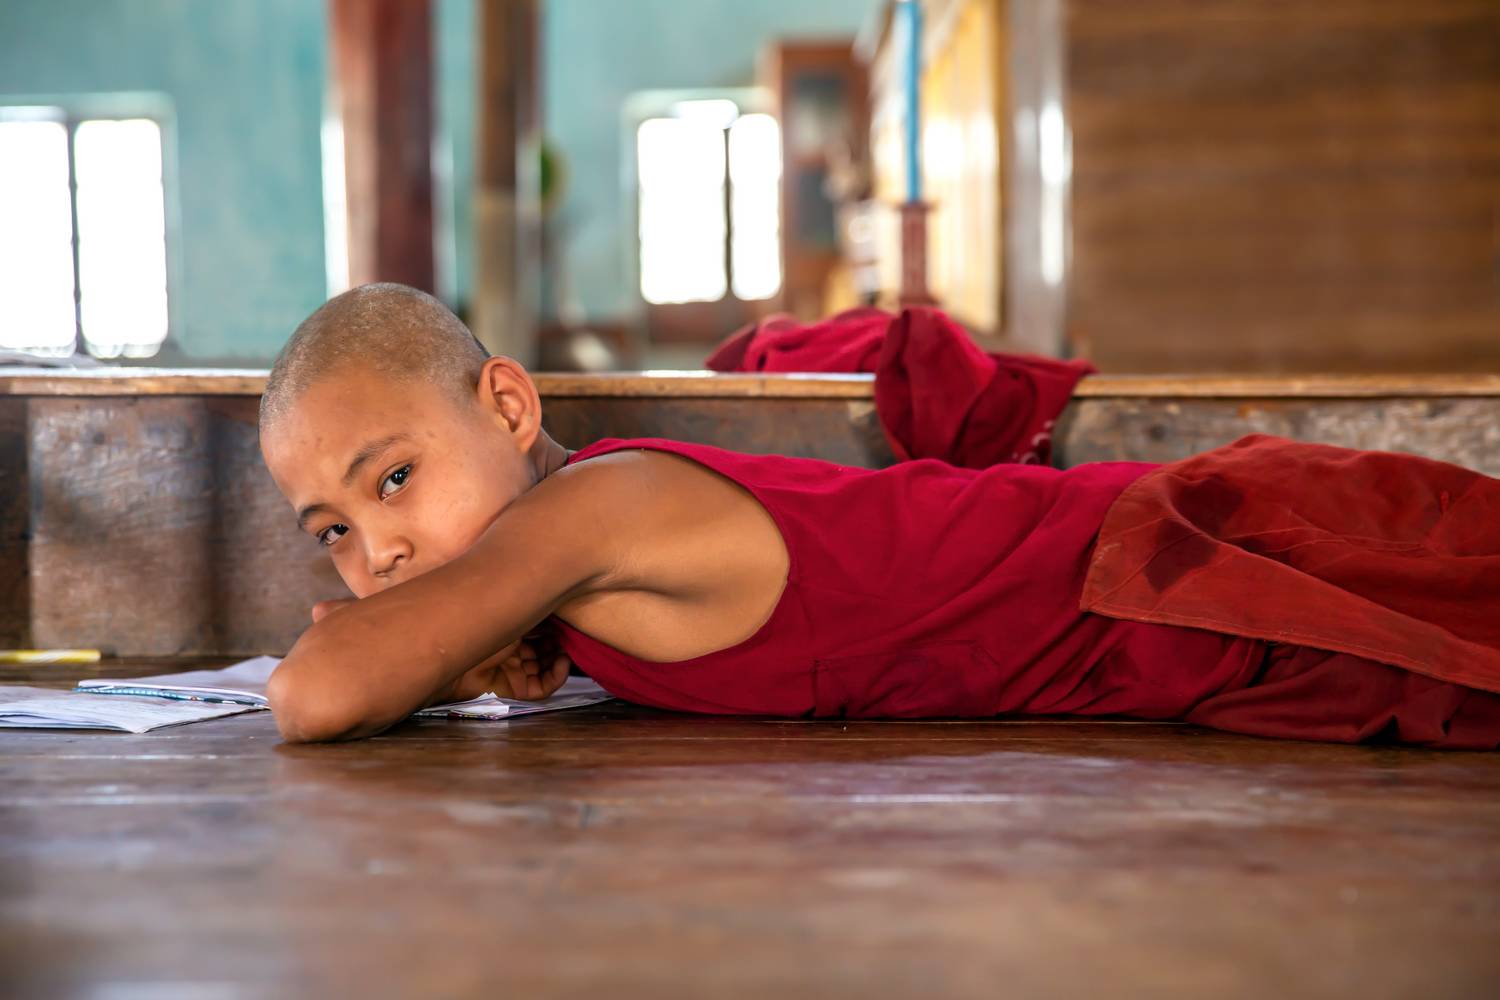 Buddhistischer Mönch in Myanmar, Asien de Miro May